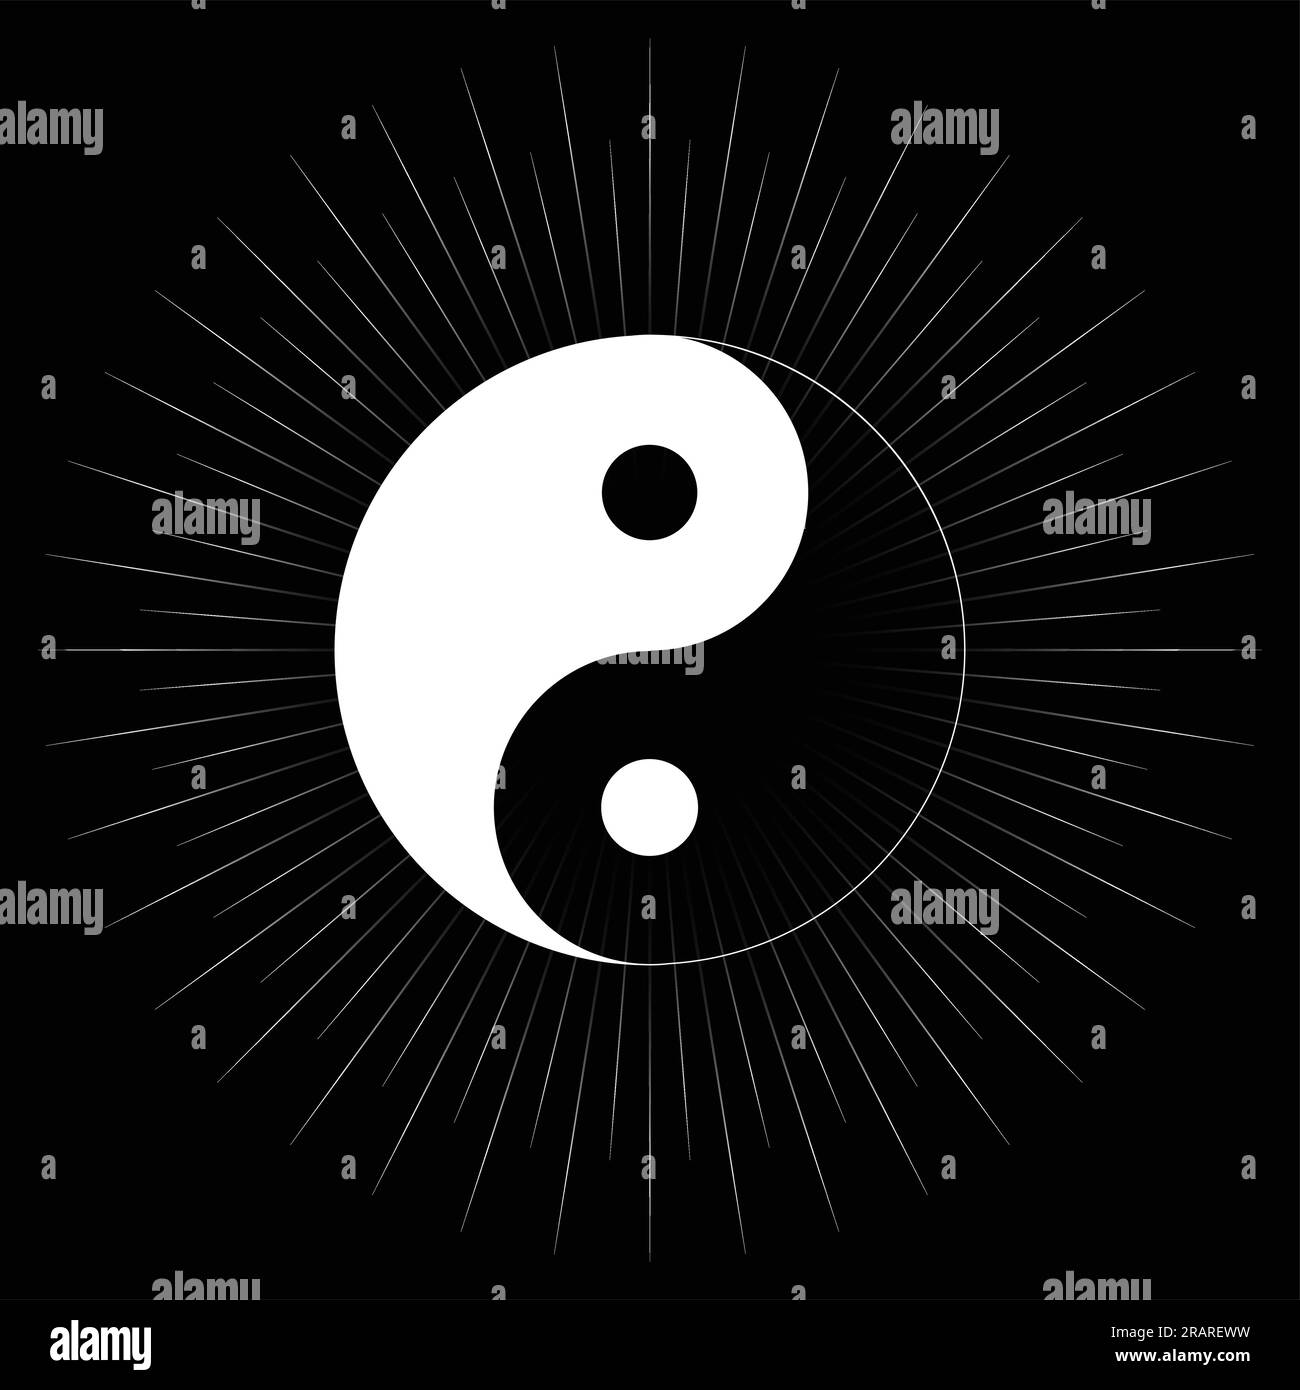 Yin and Yang symbol, Tao, Taoism, religion icon Stock Vector